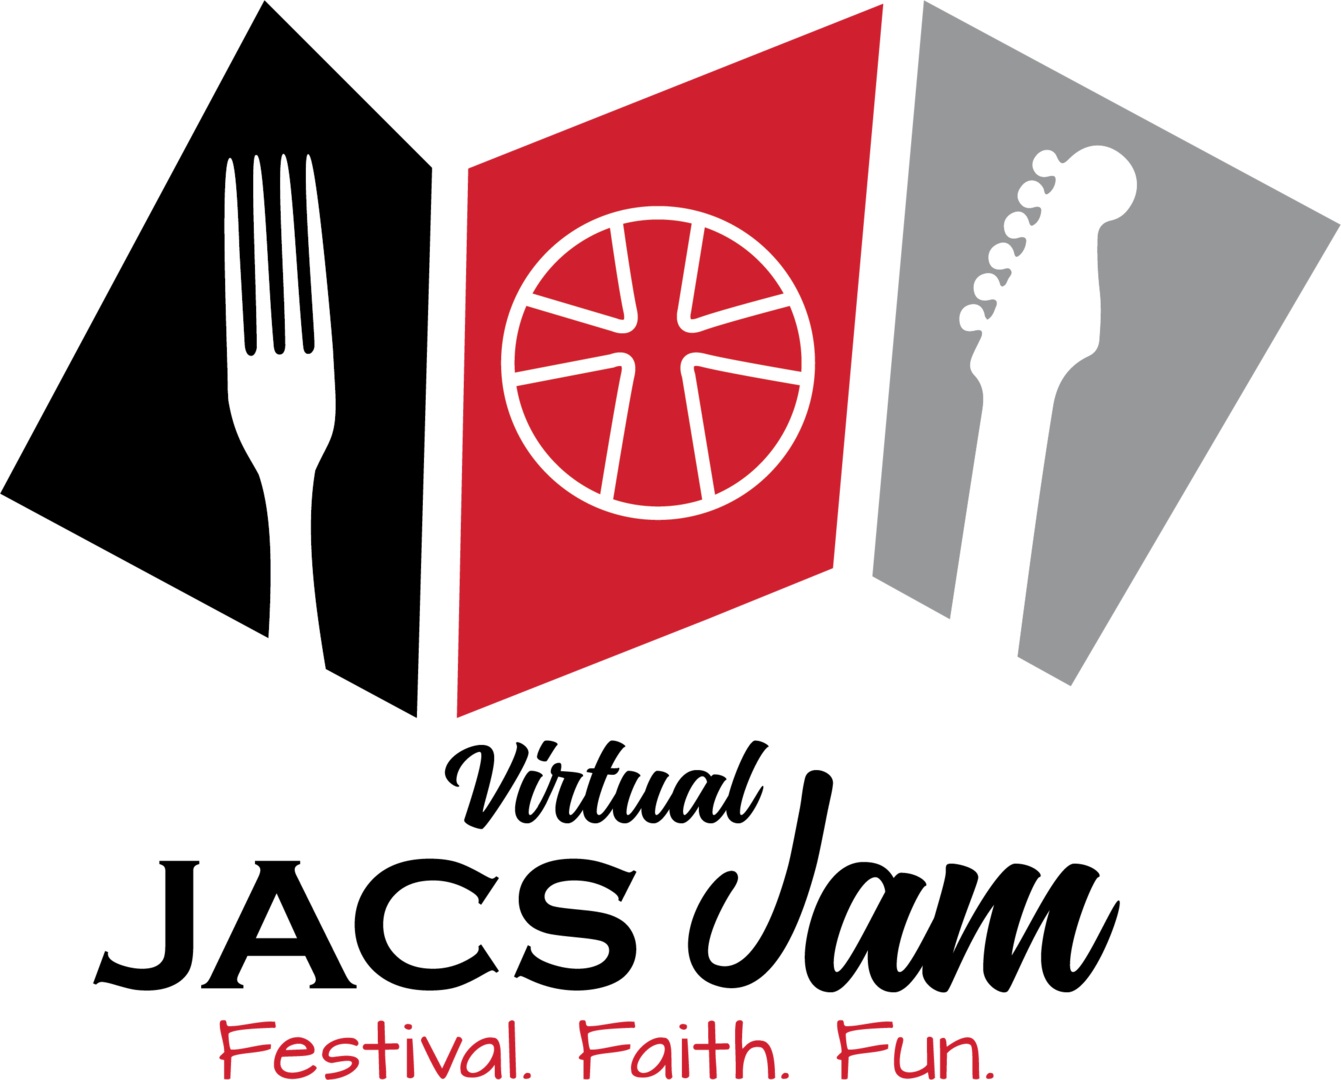 "JACS JAM" festival, Aug. 16--part live, part virtual, Shakopee, Minnesota, United States